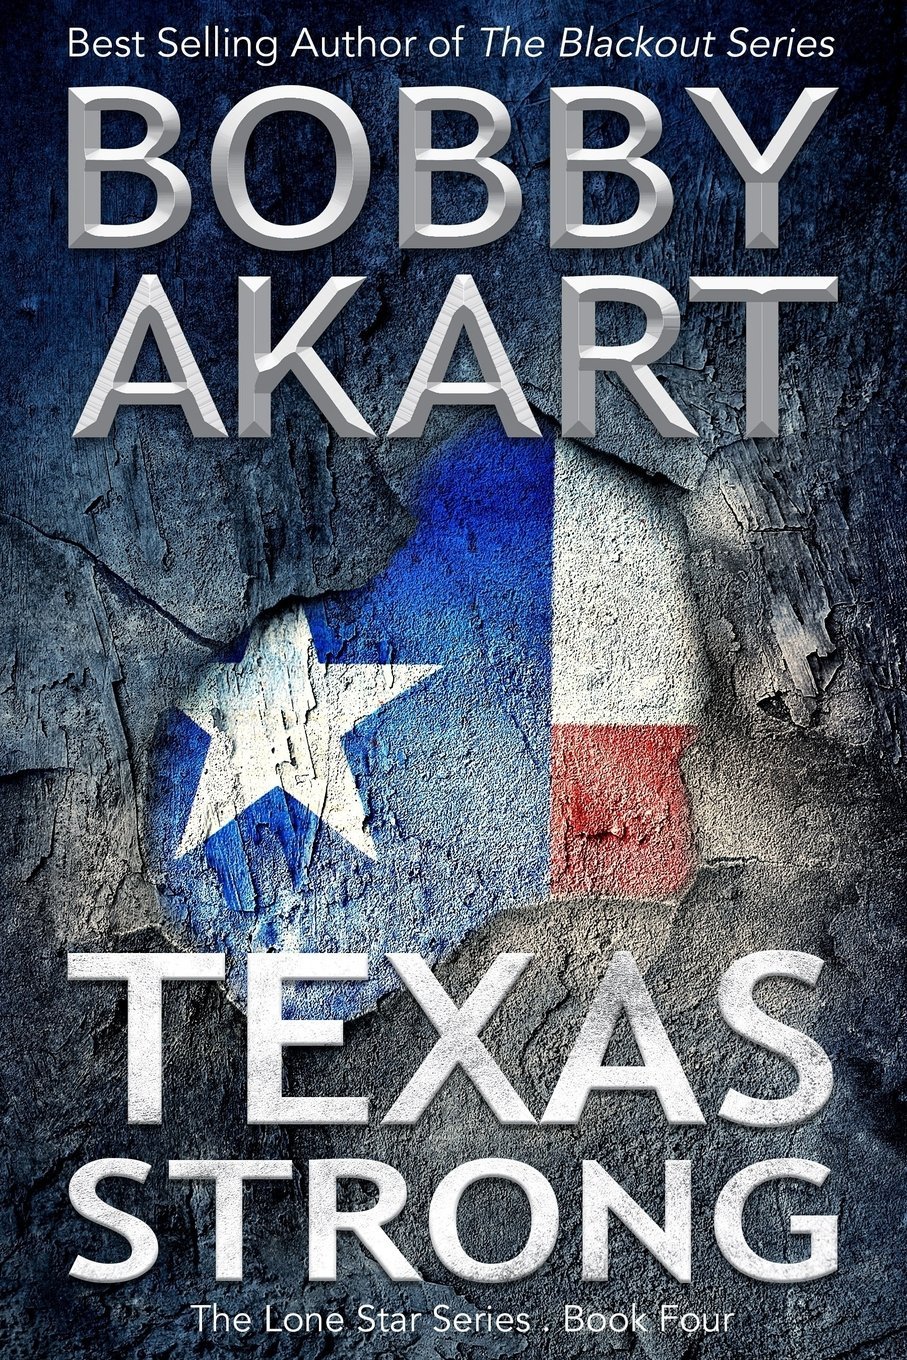 Texas Strong: Post Apocalyptic EMP Survival Fiction